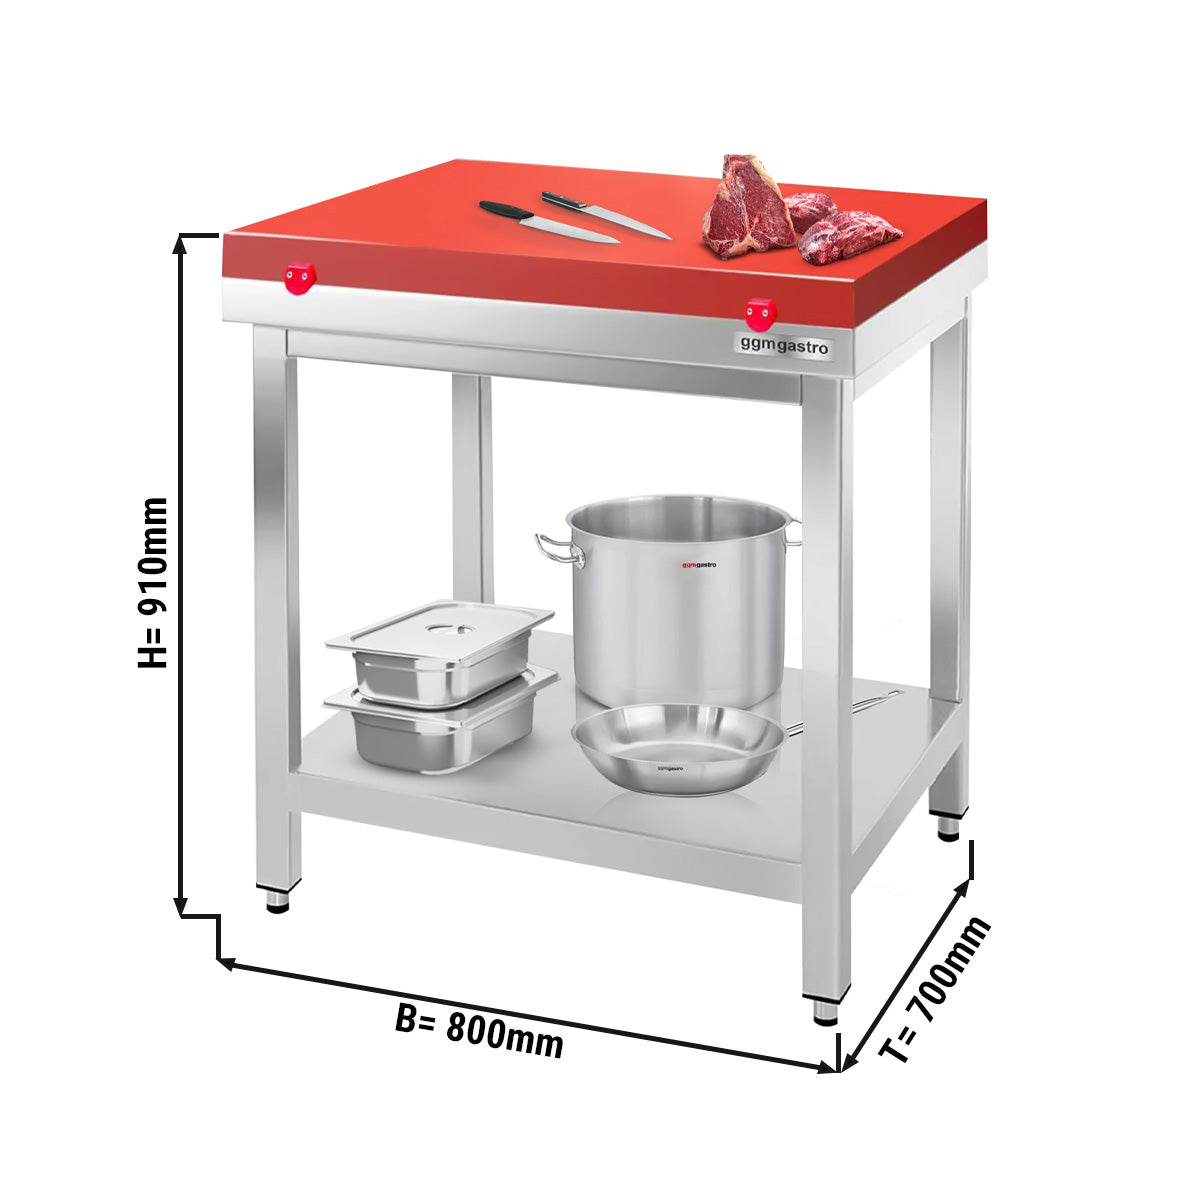 Arbejdsbord i rustfrit stål PREMIUM - 0,8 m - med underhylde - inkl. skæreplade i rød